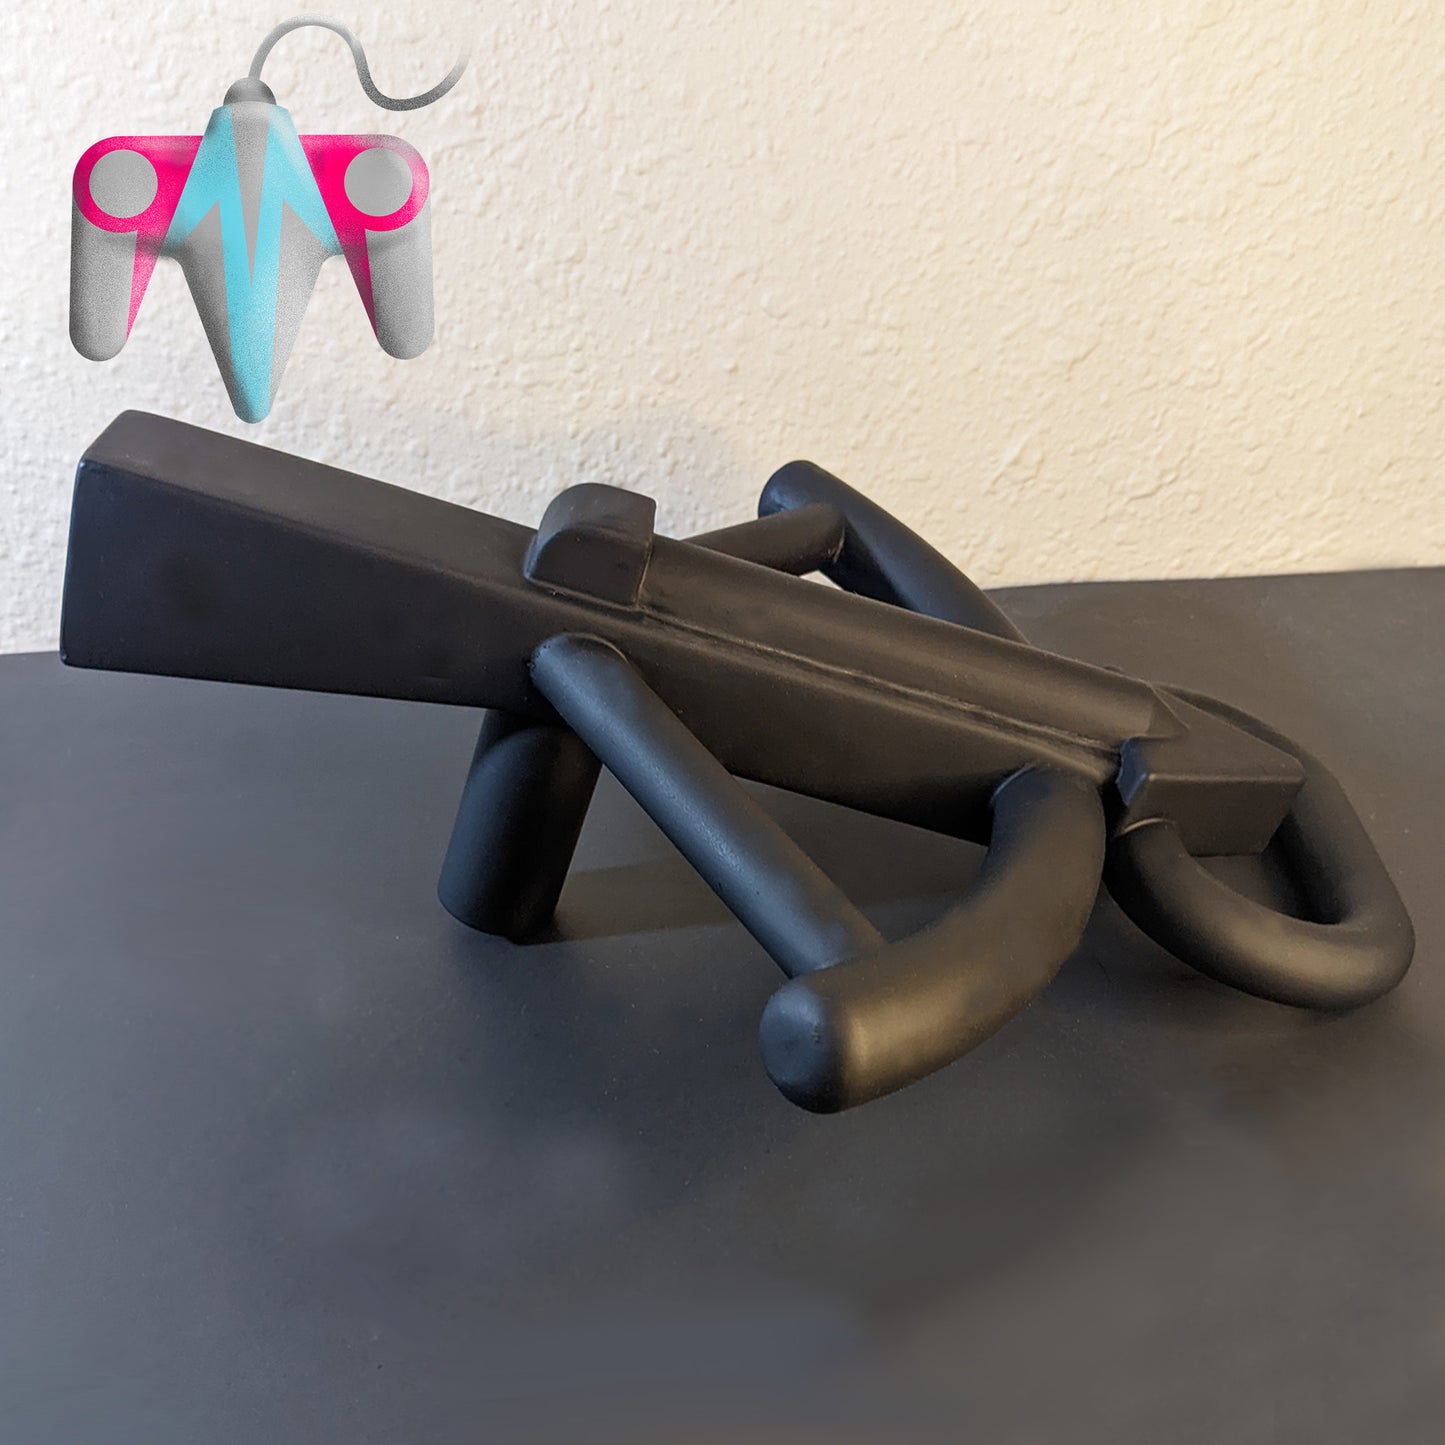 3D Printed Bowcaster